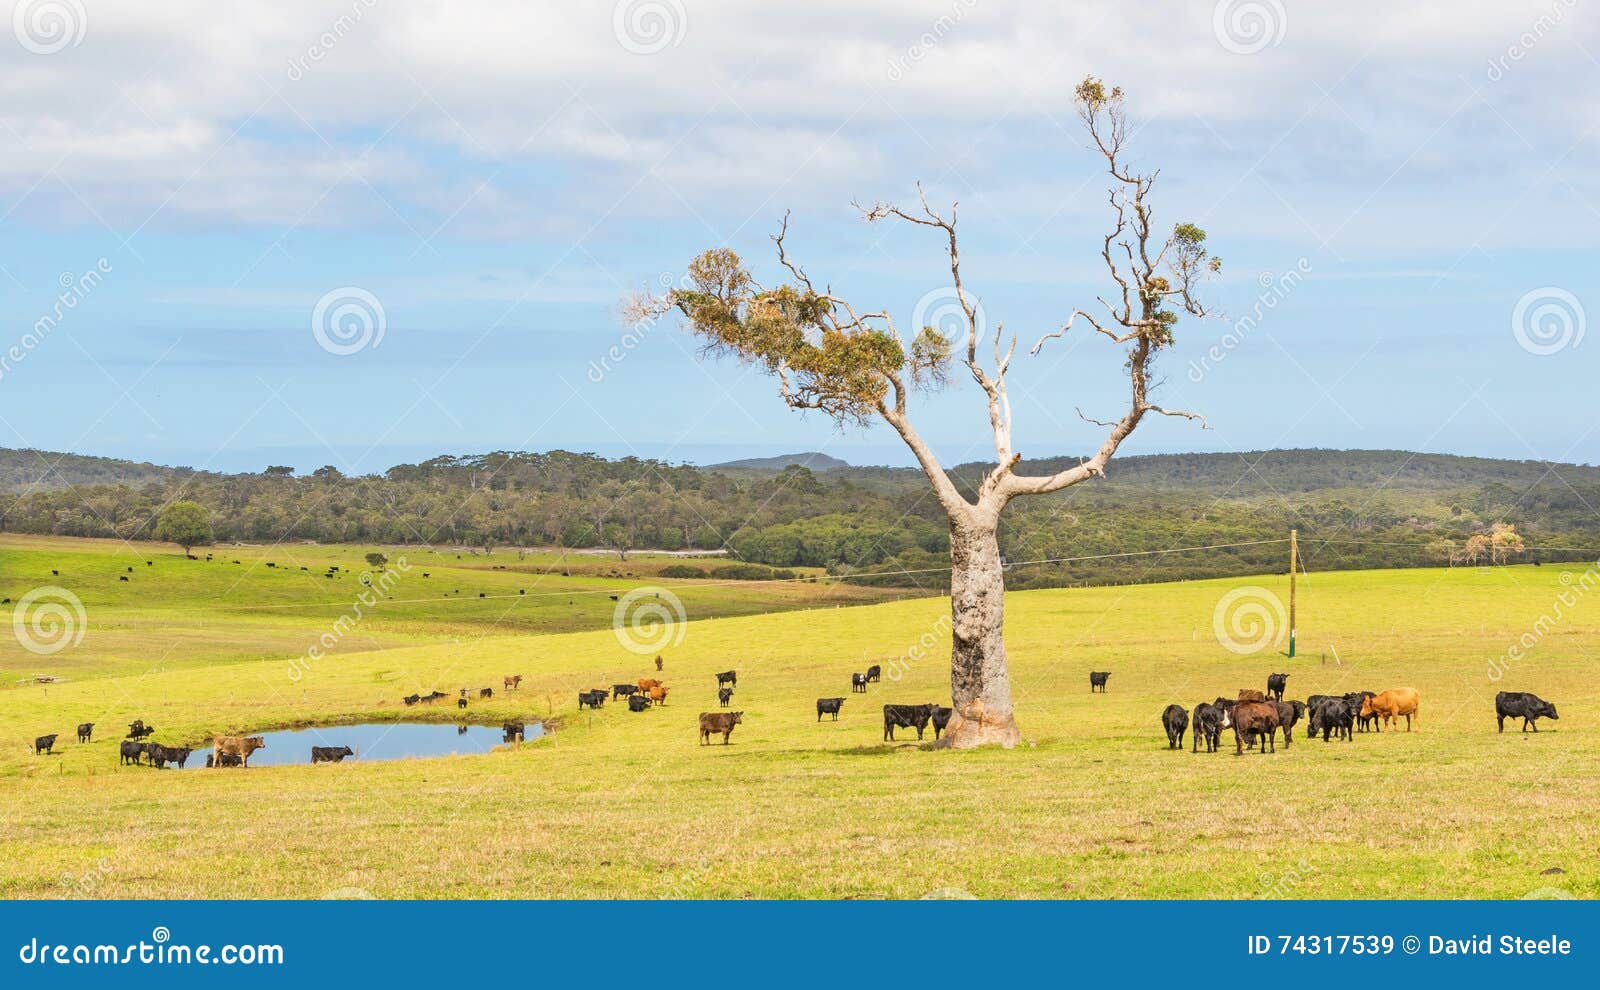 Australian Cattle Farm stock image. Image walpole - 74317539